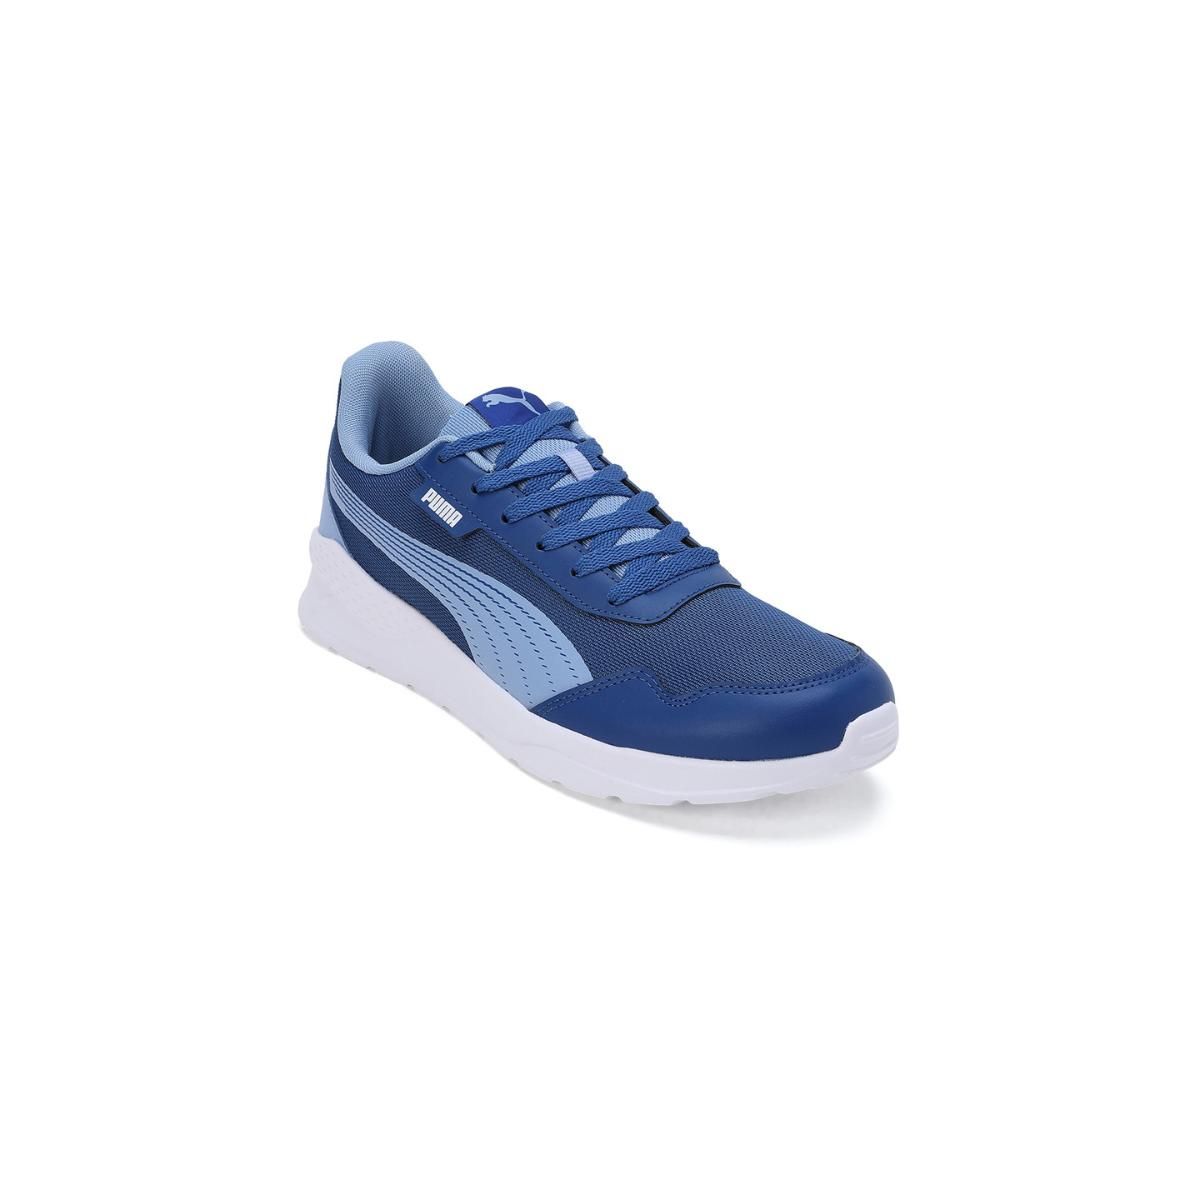 Puma Men's Roma Basic True Blue / White Ankle-High Fashion Sneaker - 10M -  Walmart.com